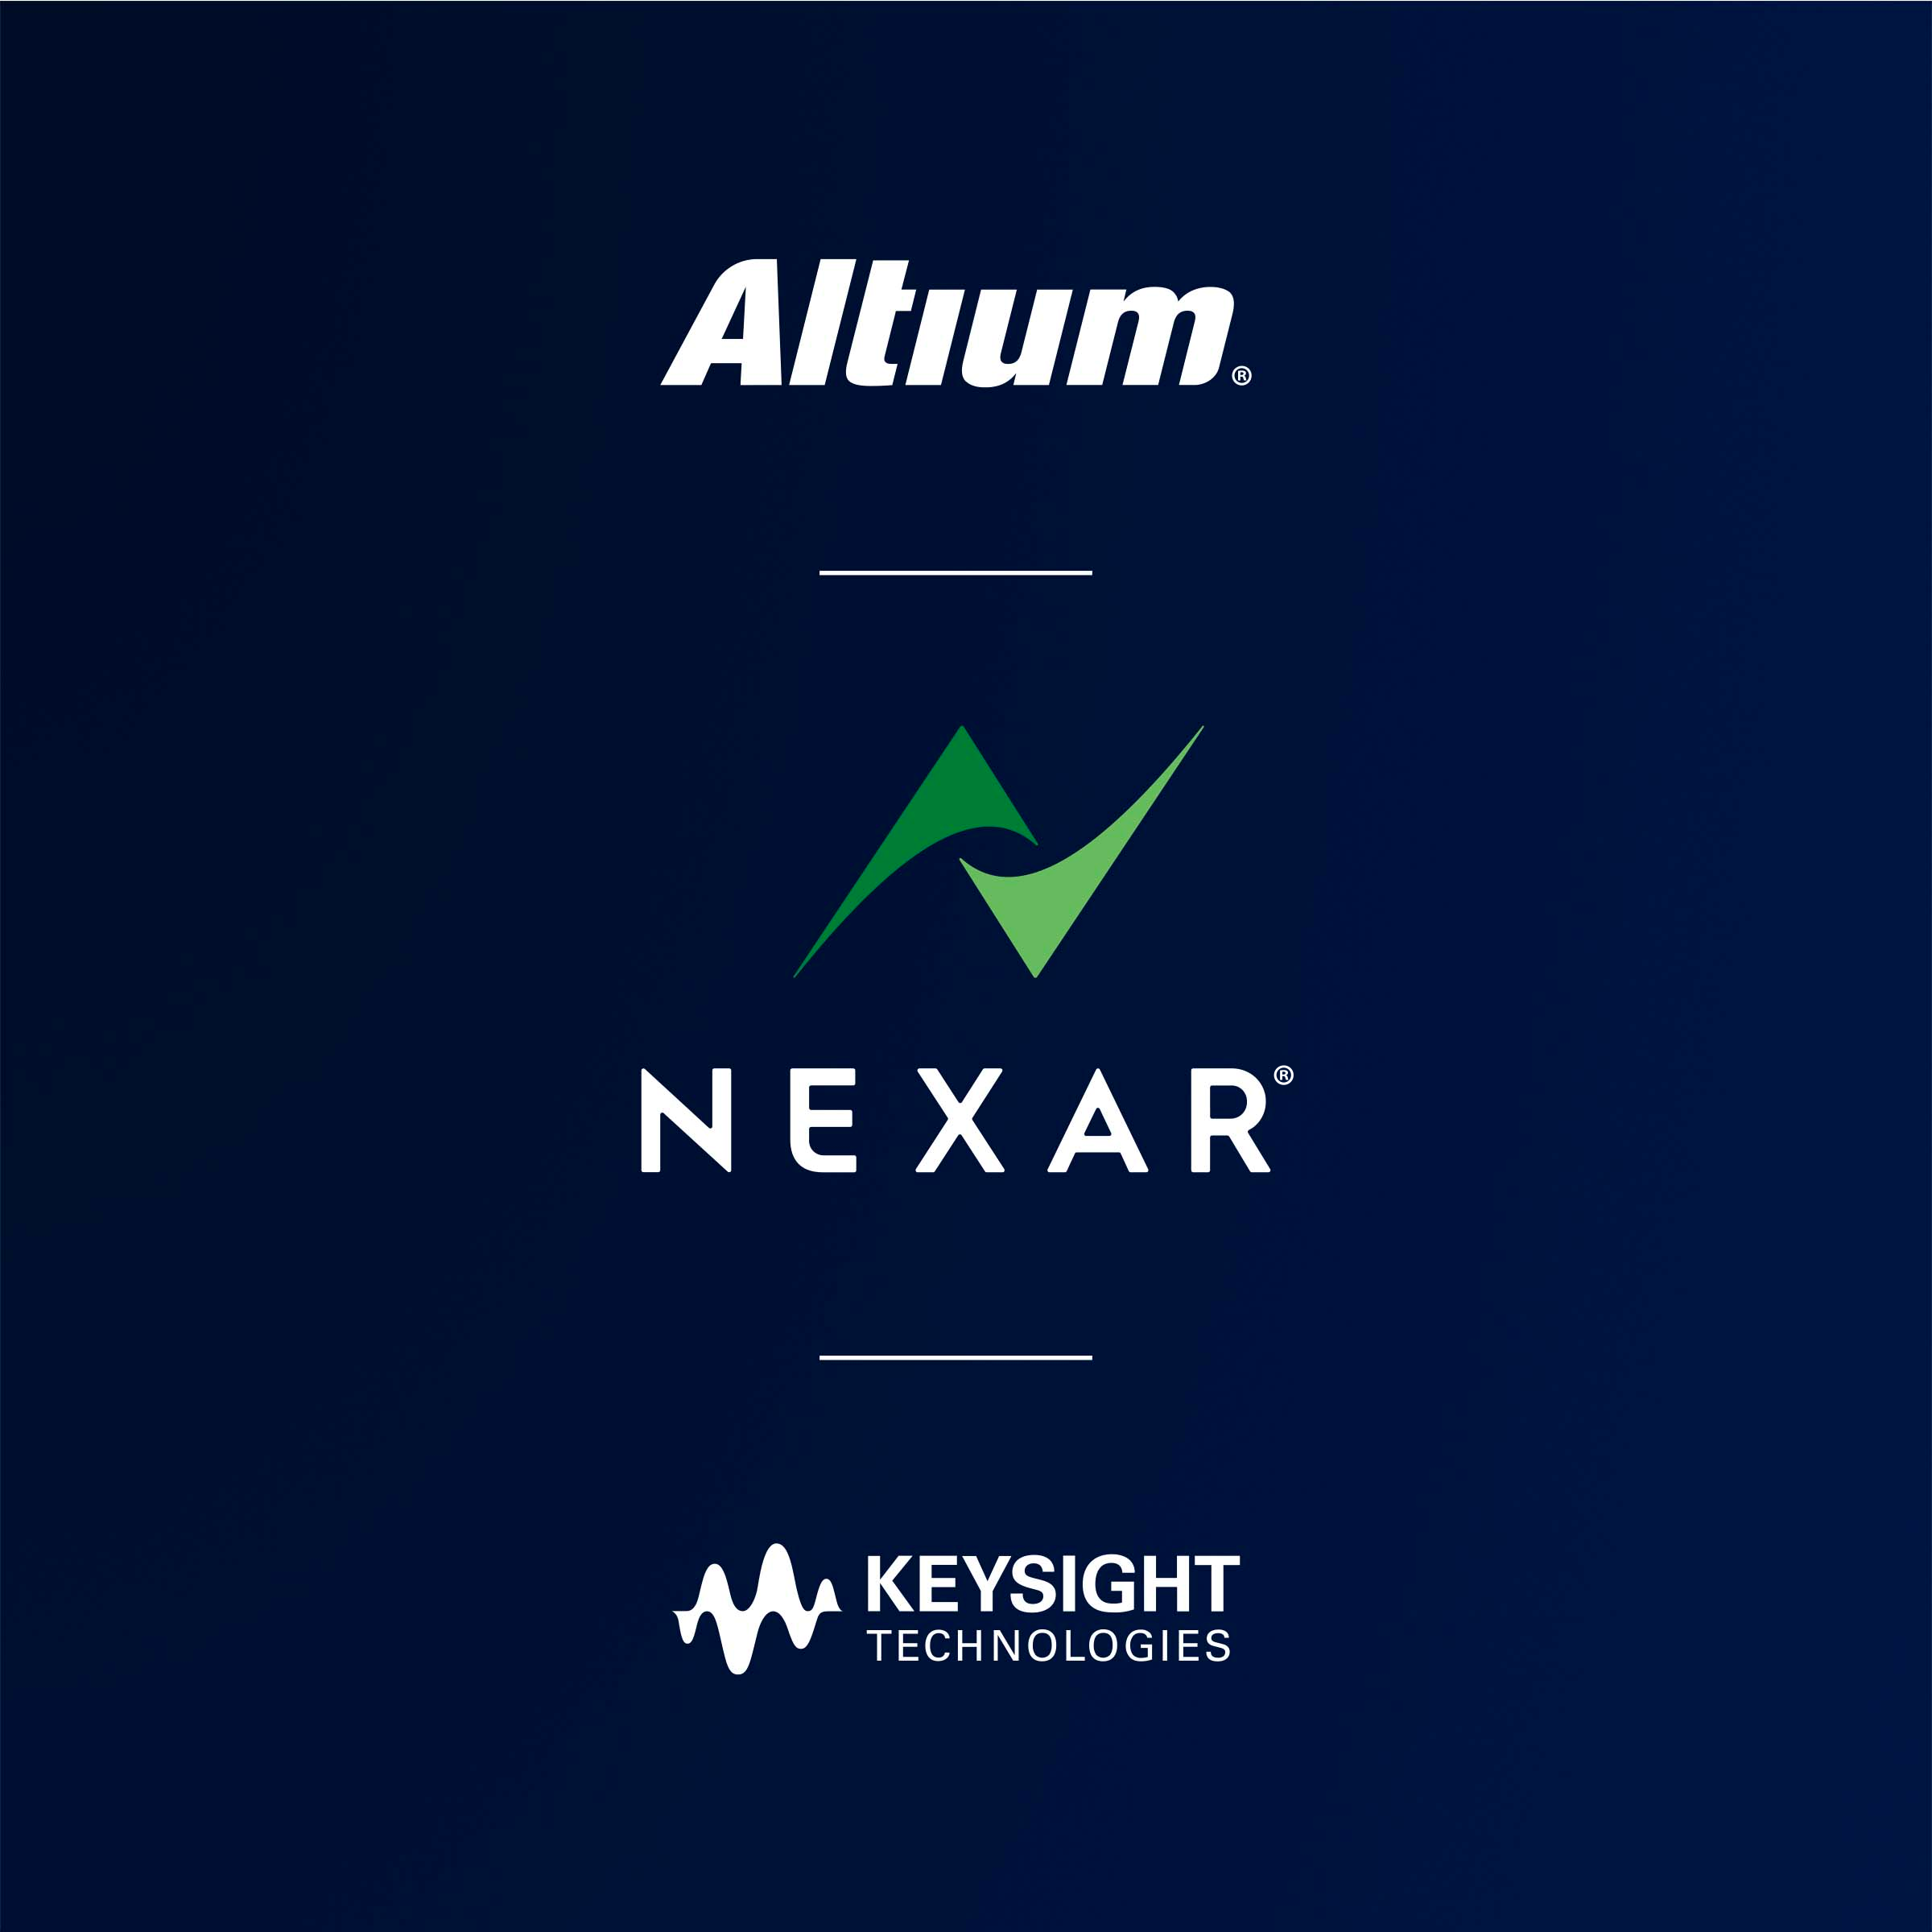 Keysight Technologies Joins Altium's Nexar Partner Program